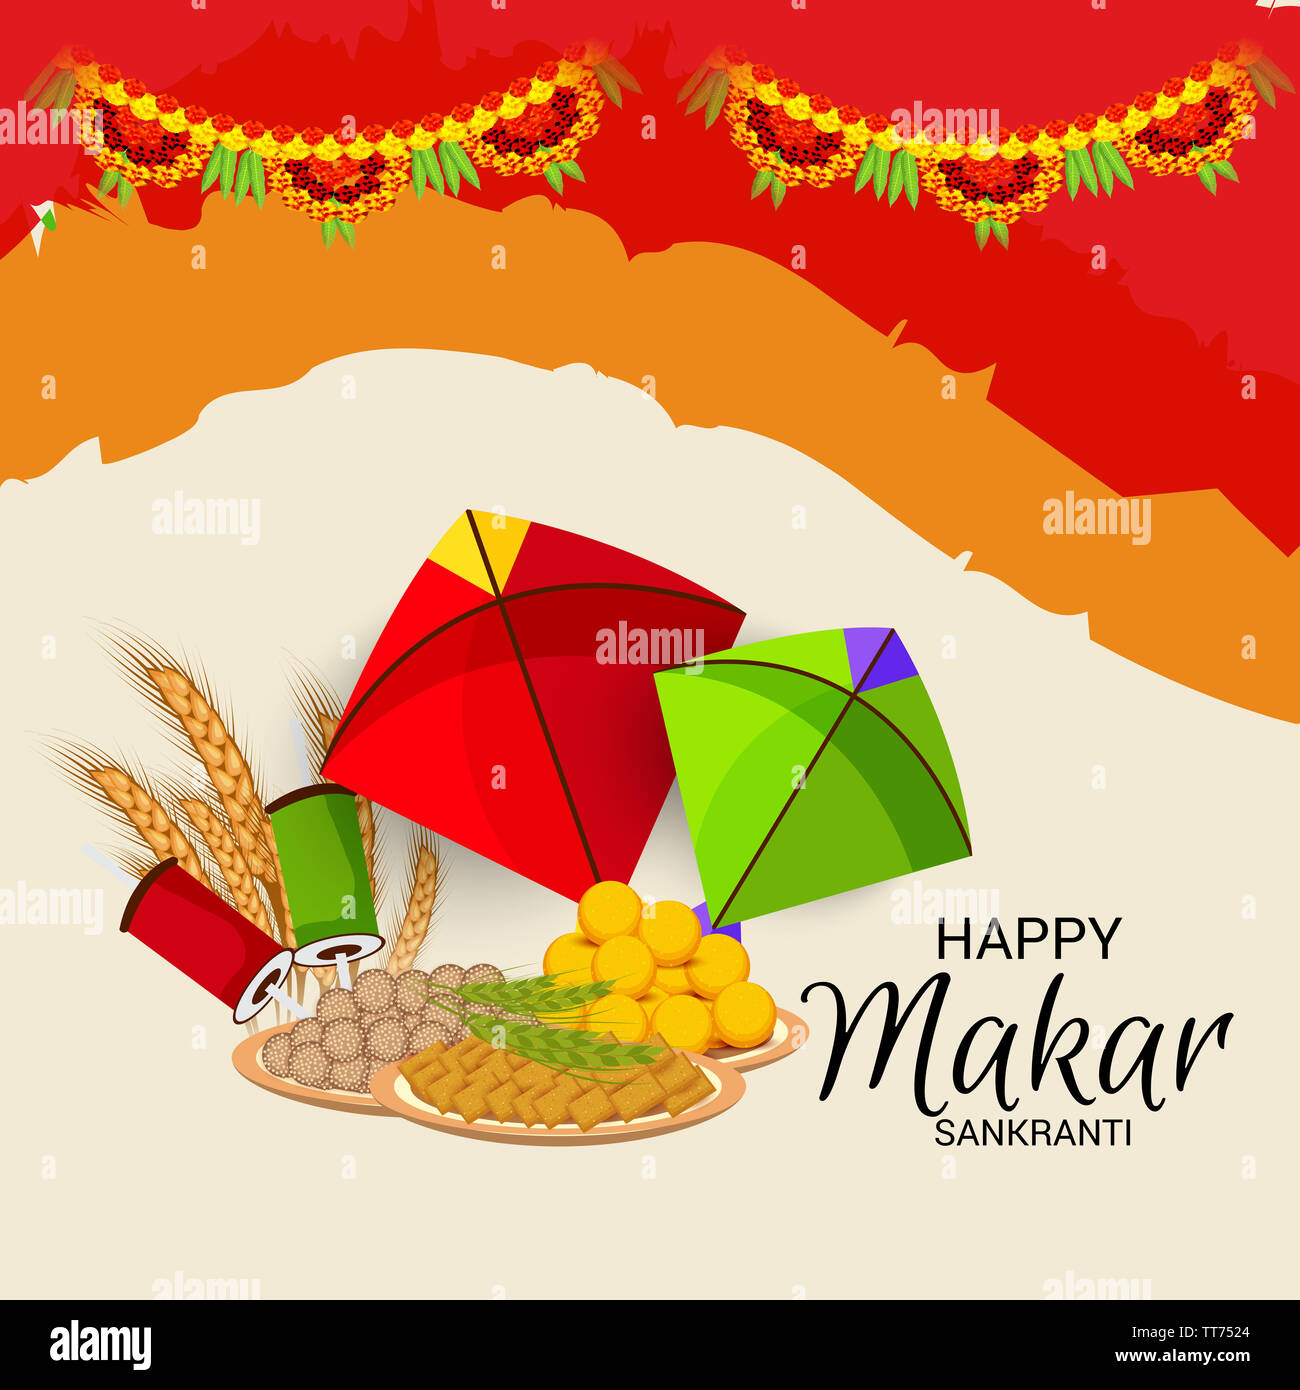 illustration of a background for Happy Makar Sankranti Stock Photo - Alamy